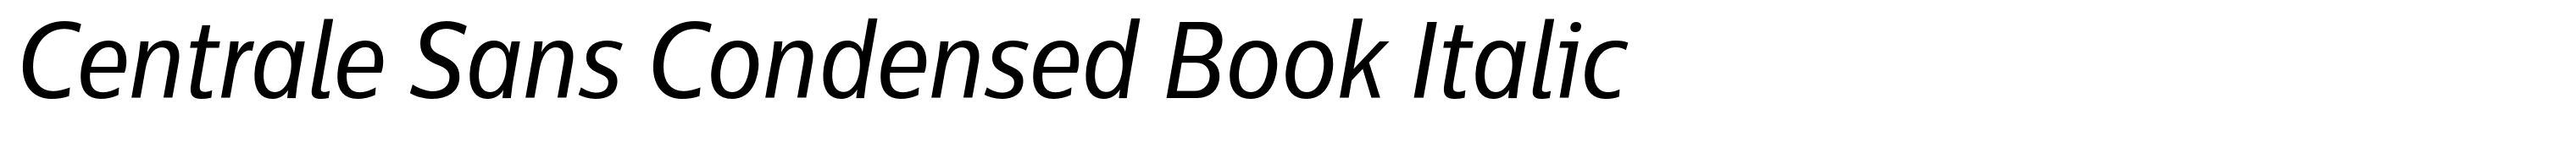 Centrale Sans Condensed Book Italic